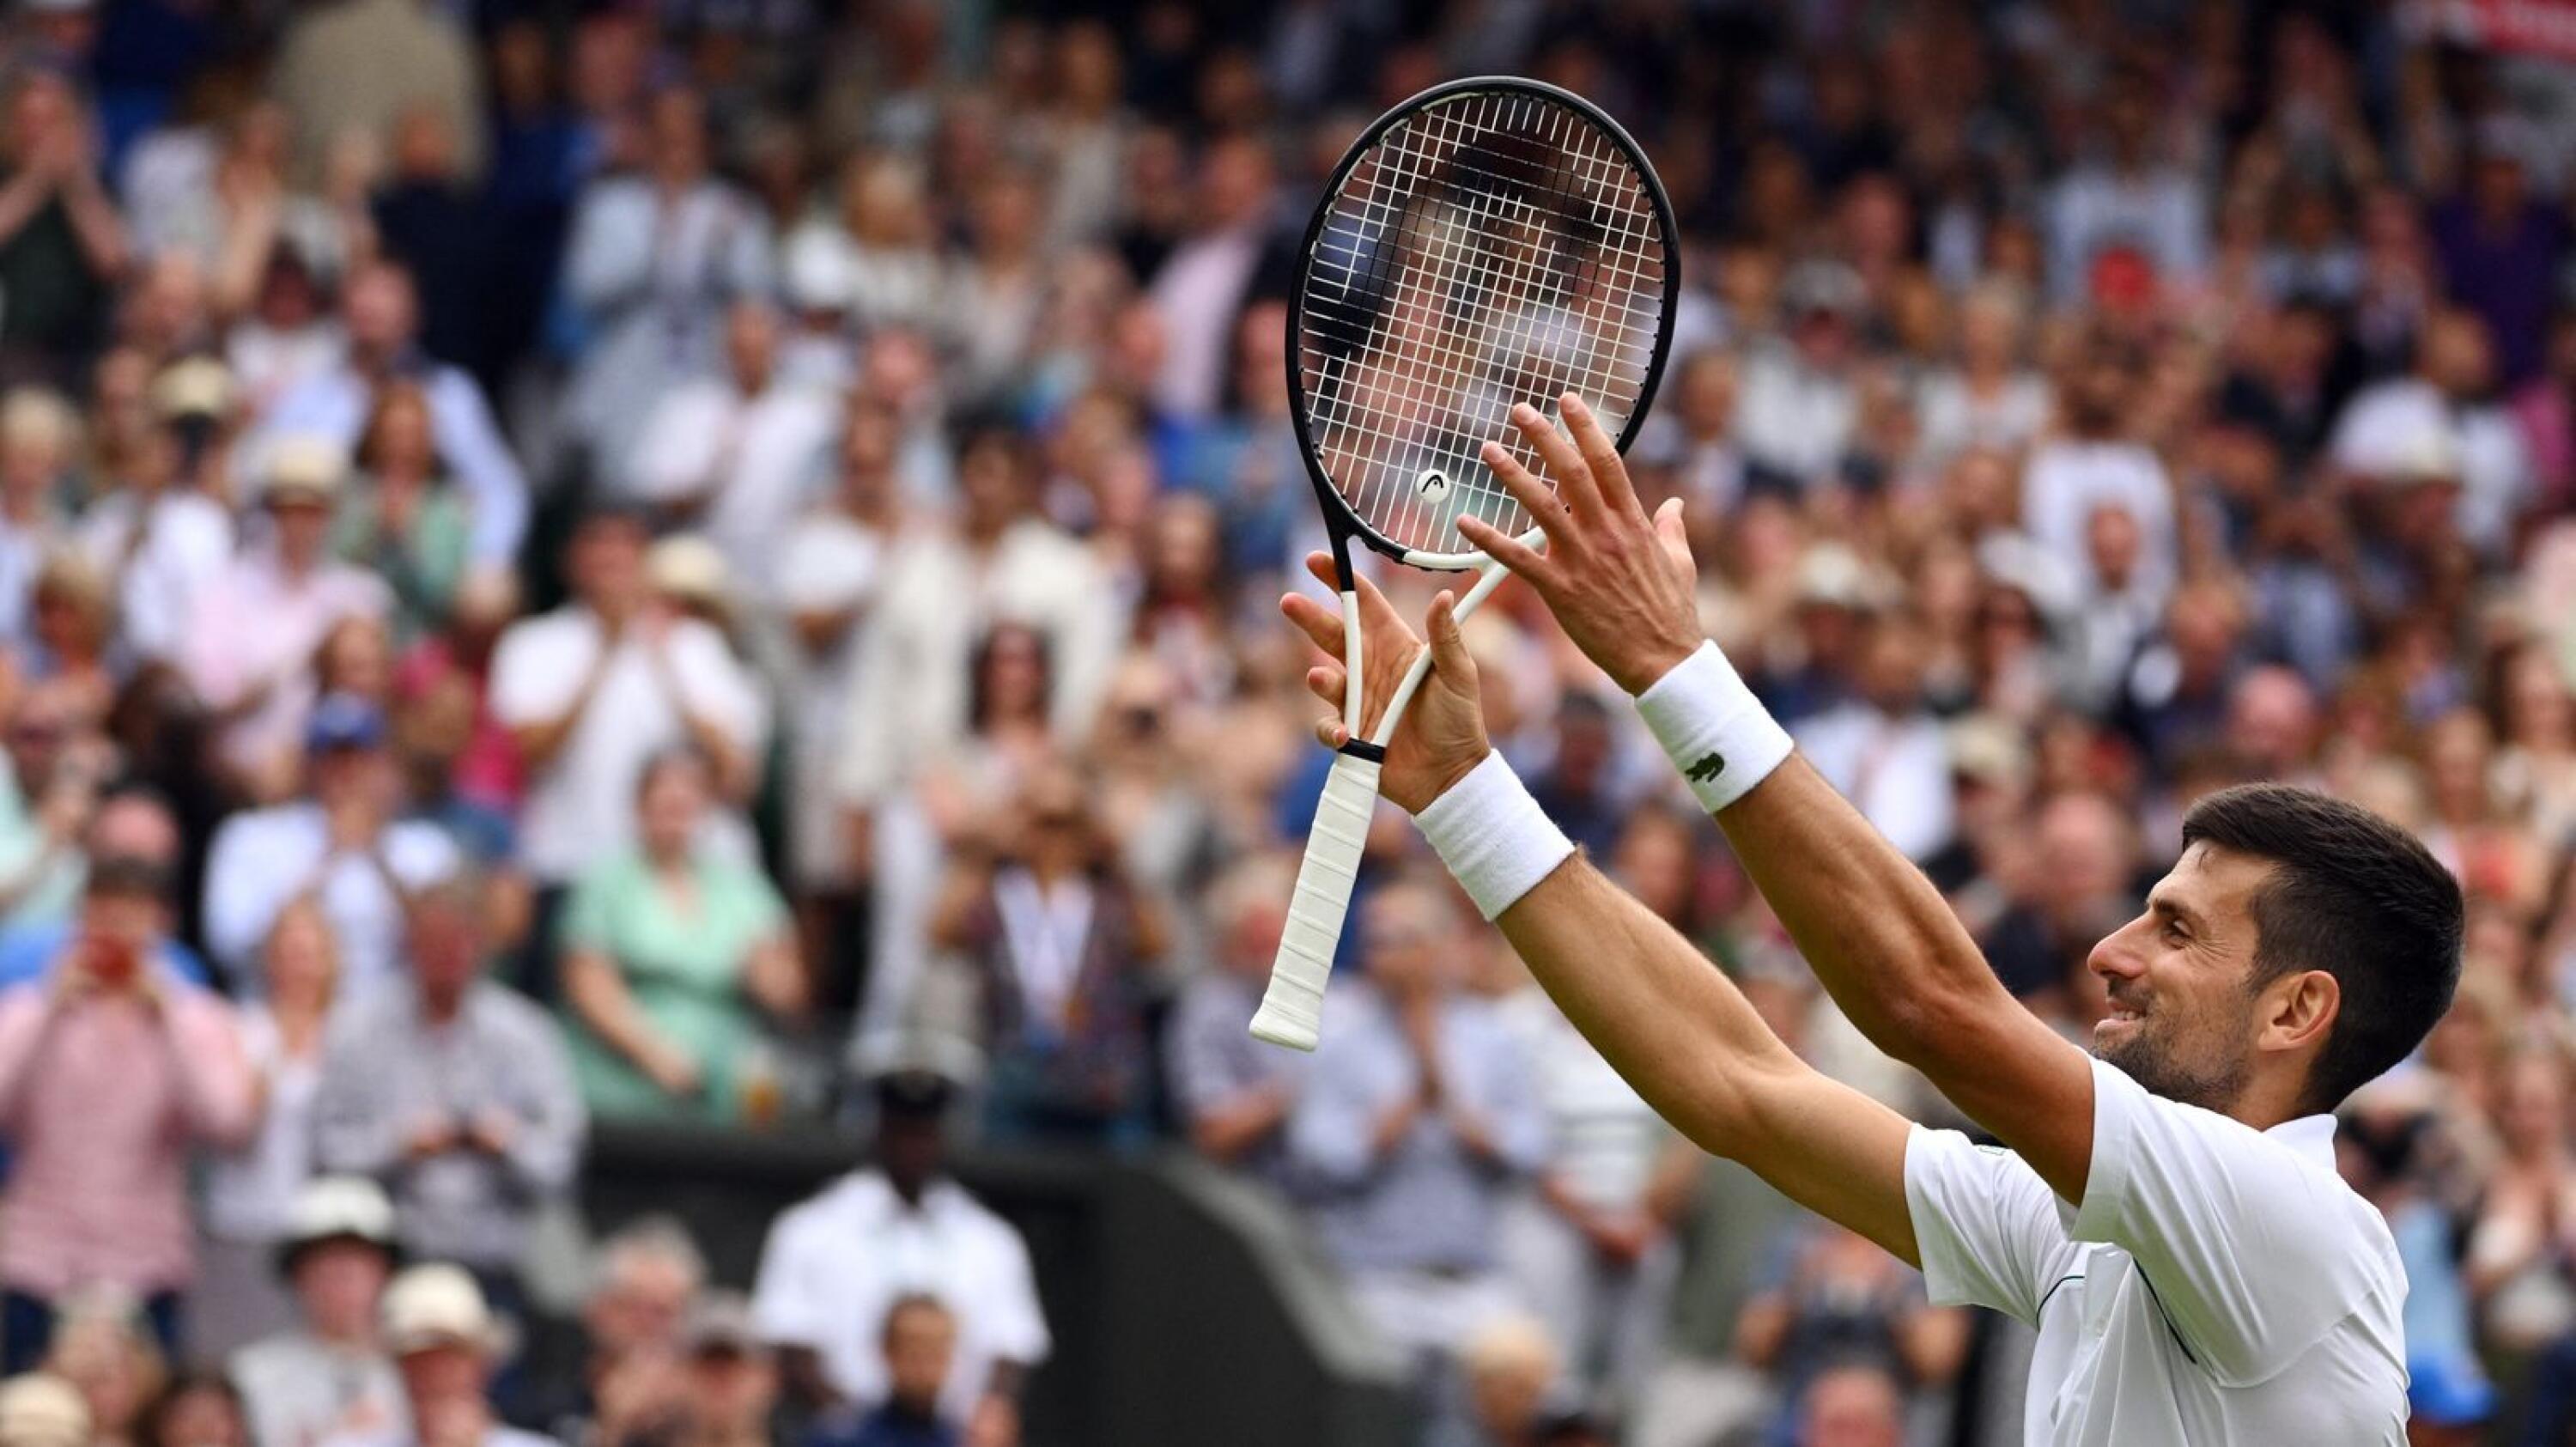 Serbia's Novak Djokovic celebrates beating Jannik Sinner during their men's singles quarter final tennis match on the ninth day of the 2022 Wimbledon Championships at The All England Tennis Club in Wimbledon, southwest London, on Tuesday